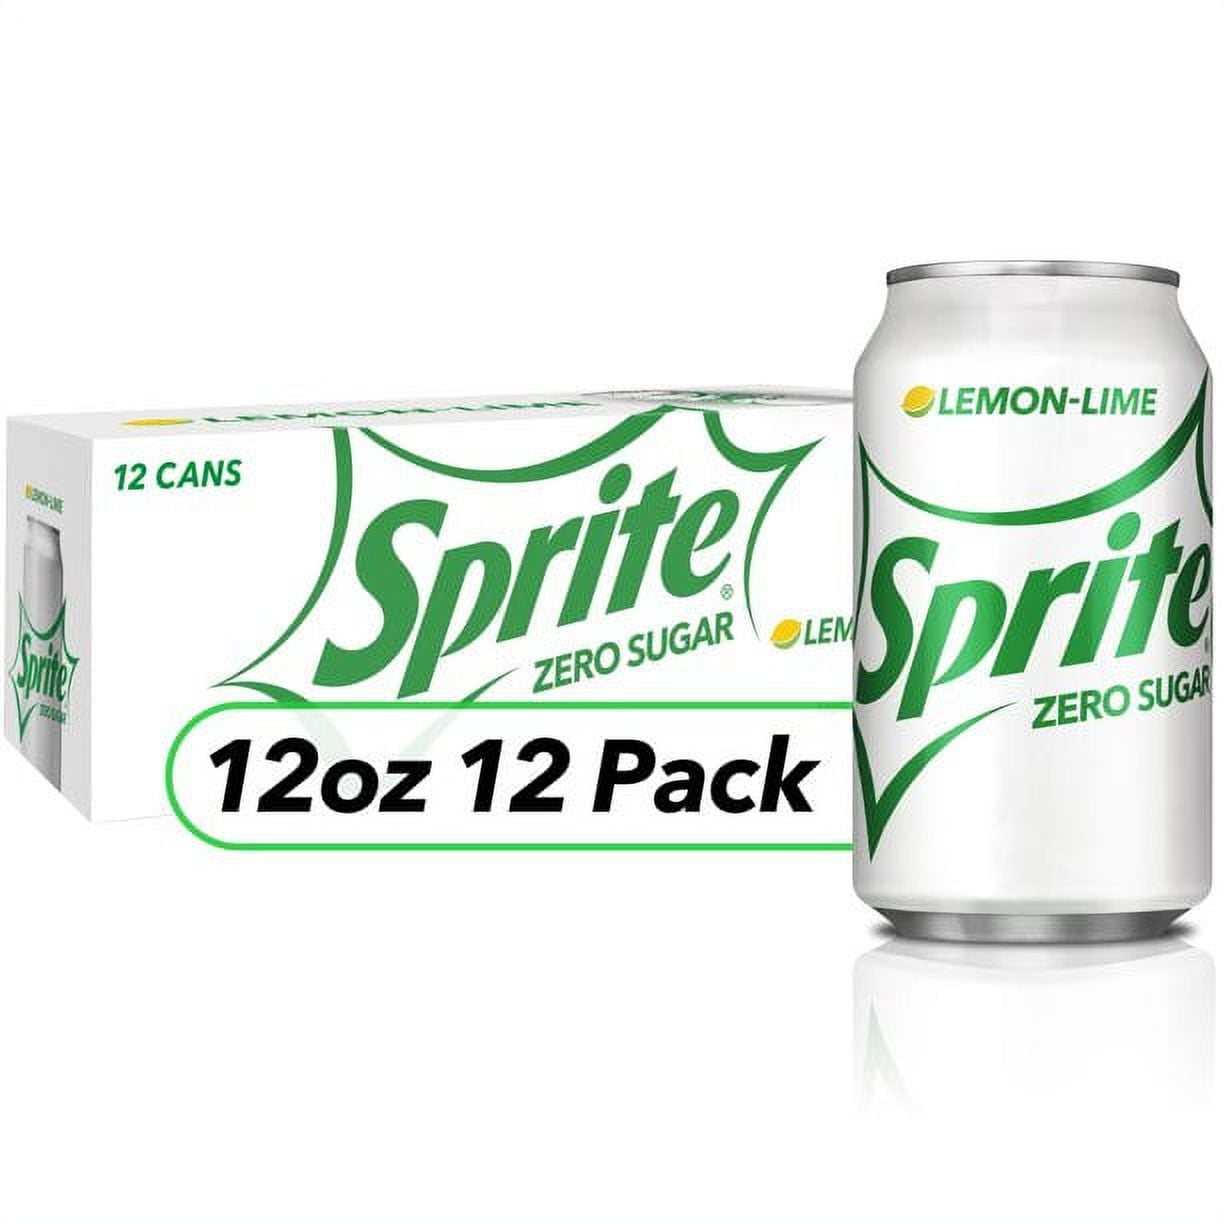 Sprite Zero Sugar Lemon Lime Soda Pop, 12 Fl Oz, 12 Pack Cans